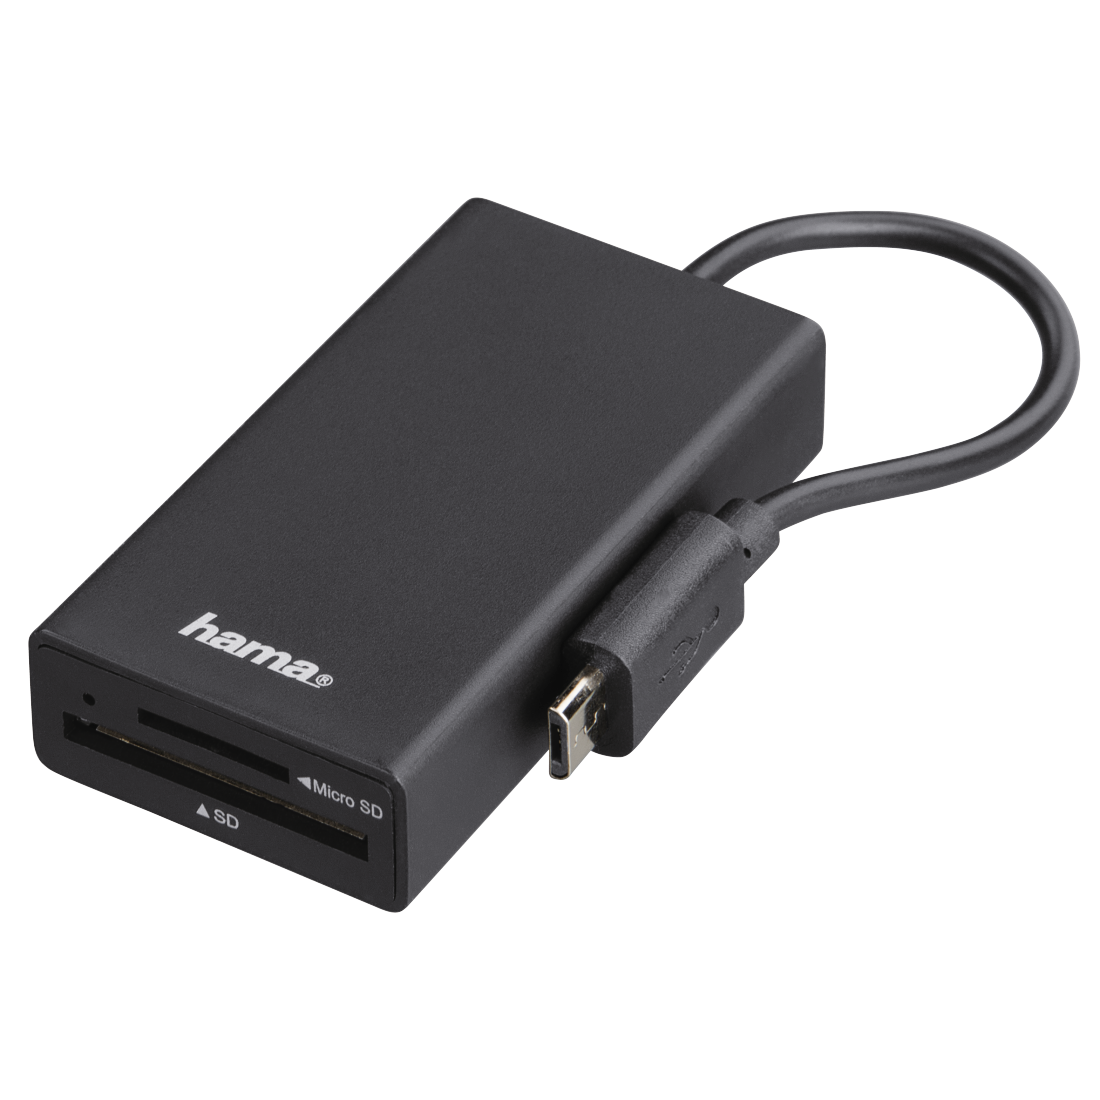 00054141 Hama USB 2.0 OTG Hub/Card Reader for Smartphone/Tablet/Notebook/PC  | hama.com